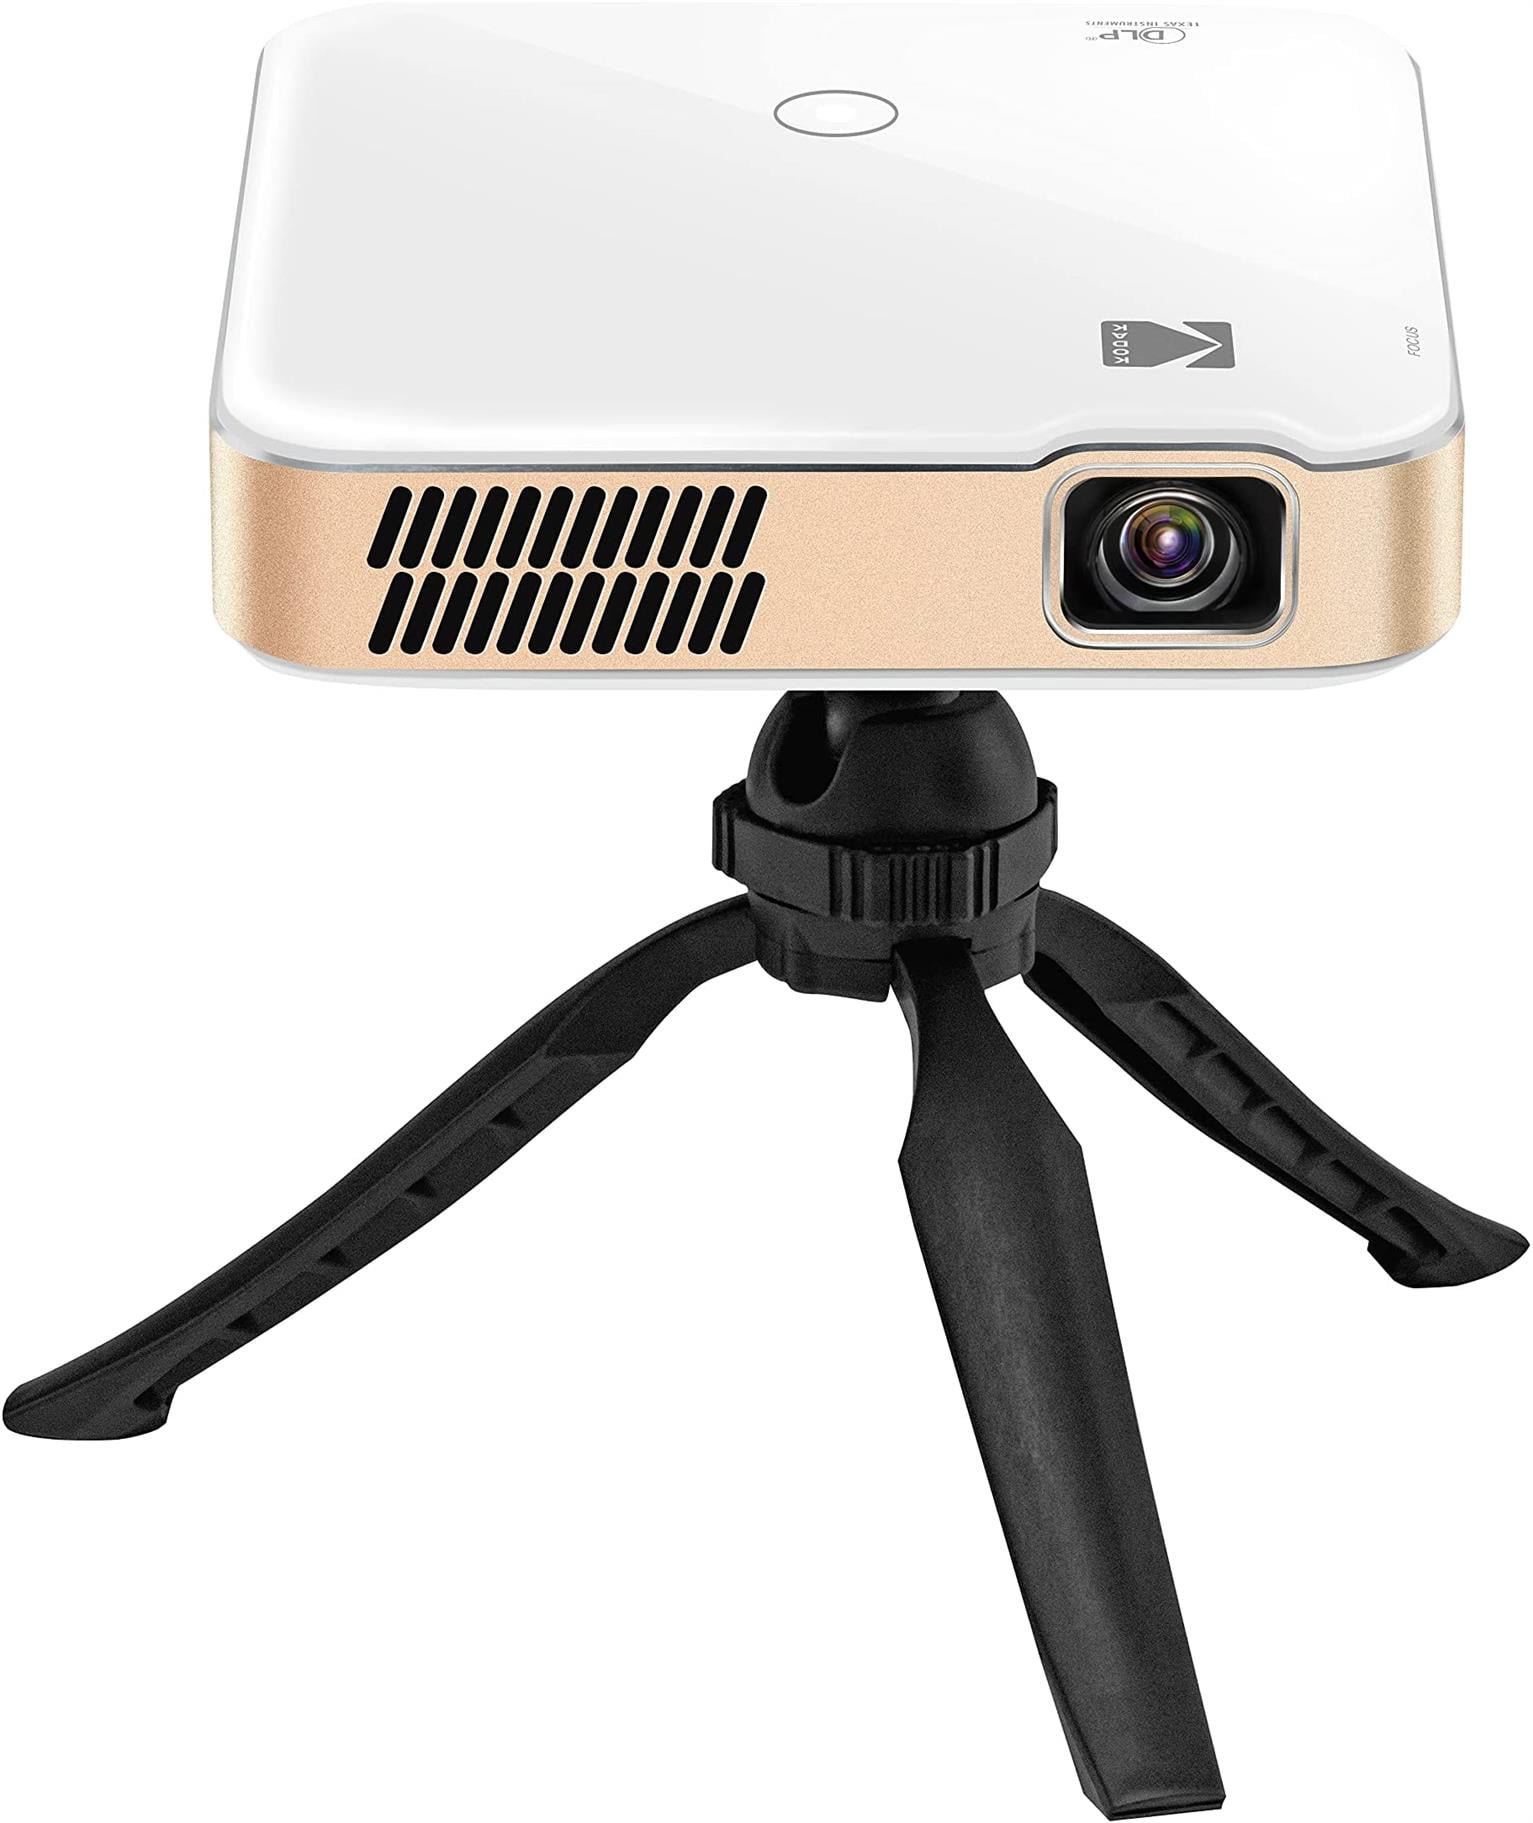 Kodak Luma 400 Portable HD Smart Projector Review